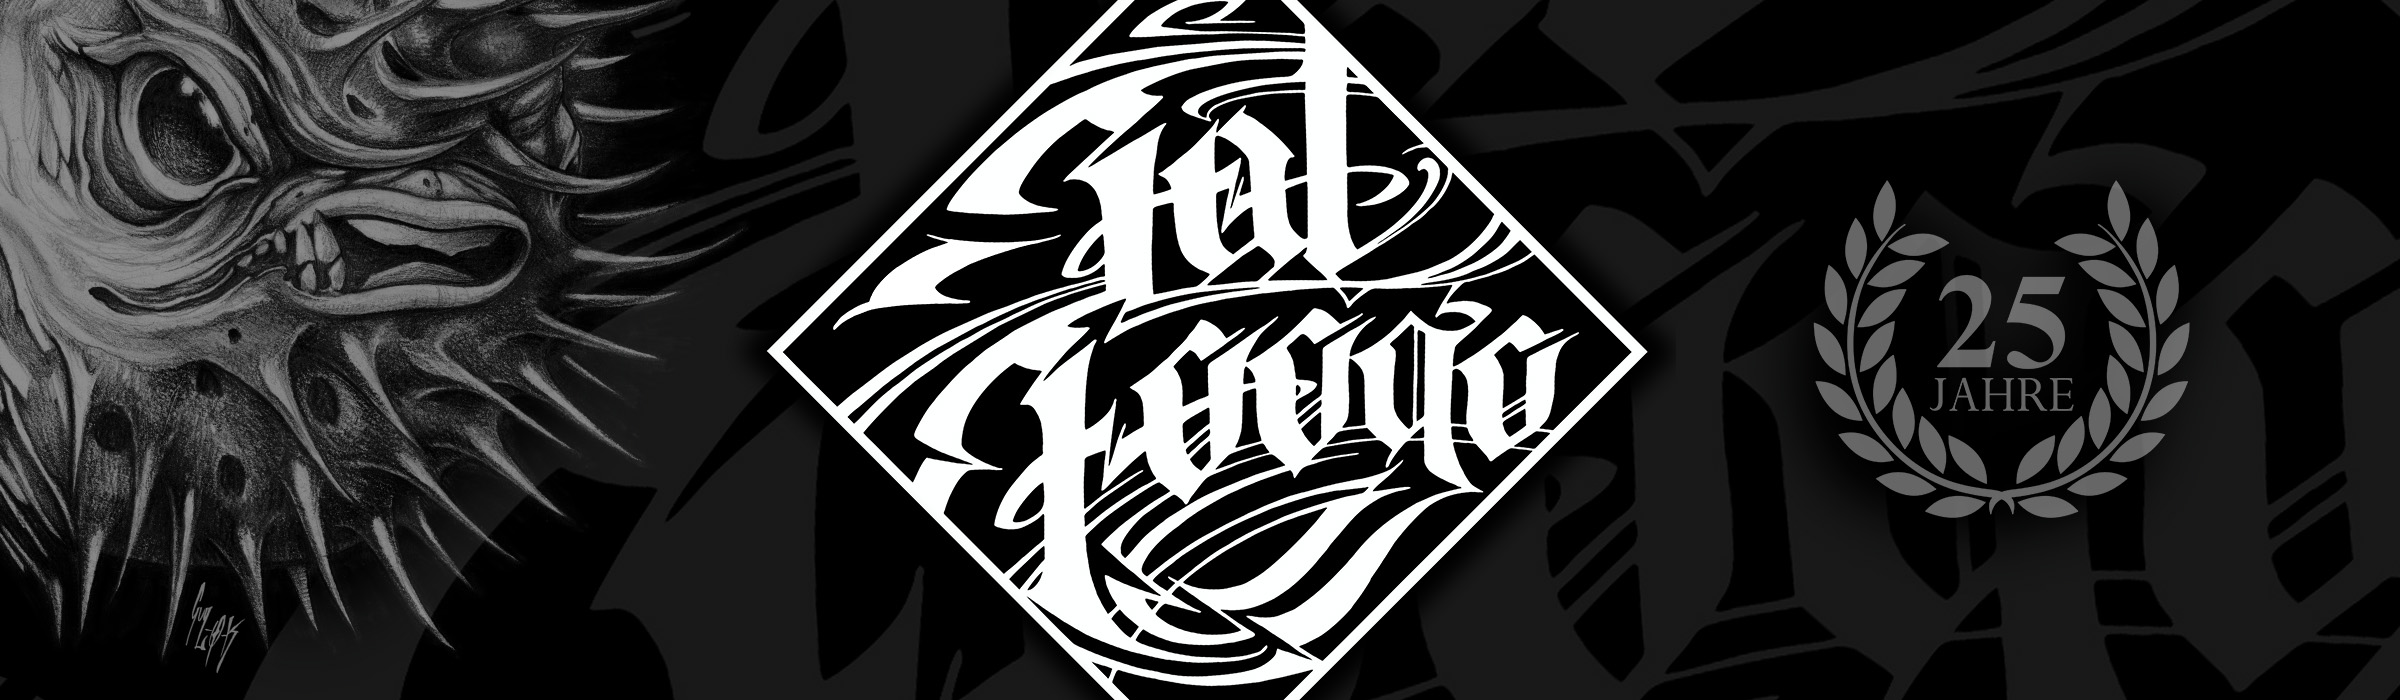 Fat Foogo, Bregenz, Andreas Haller, Andy Hontz, Tattoo, Piercing, Vorarlberg